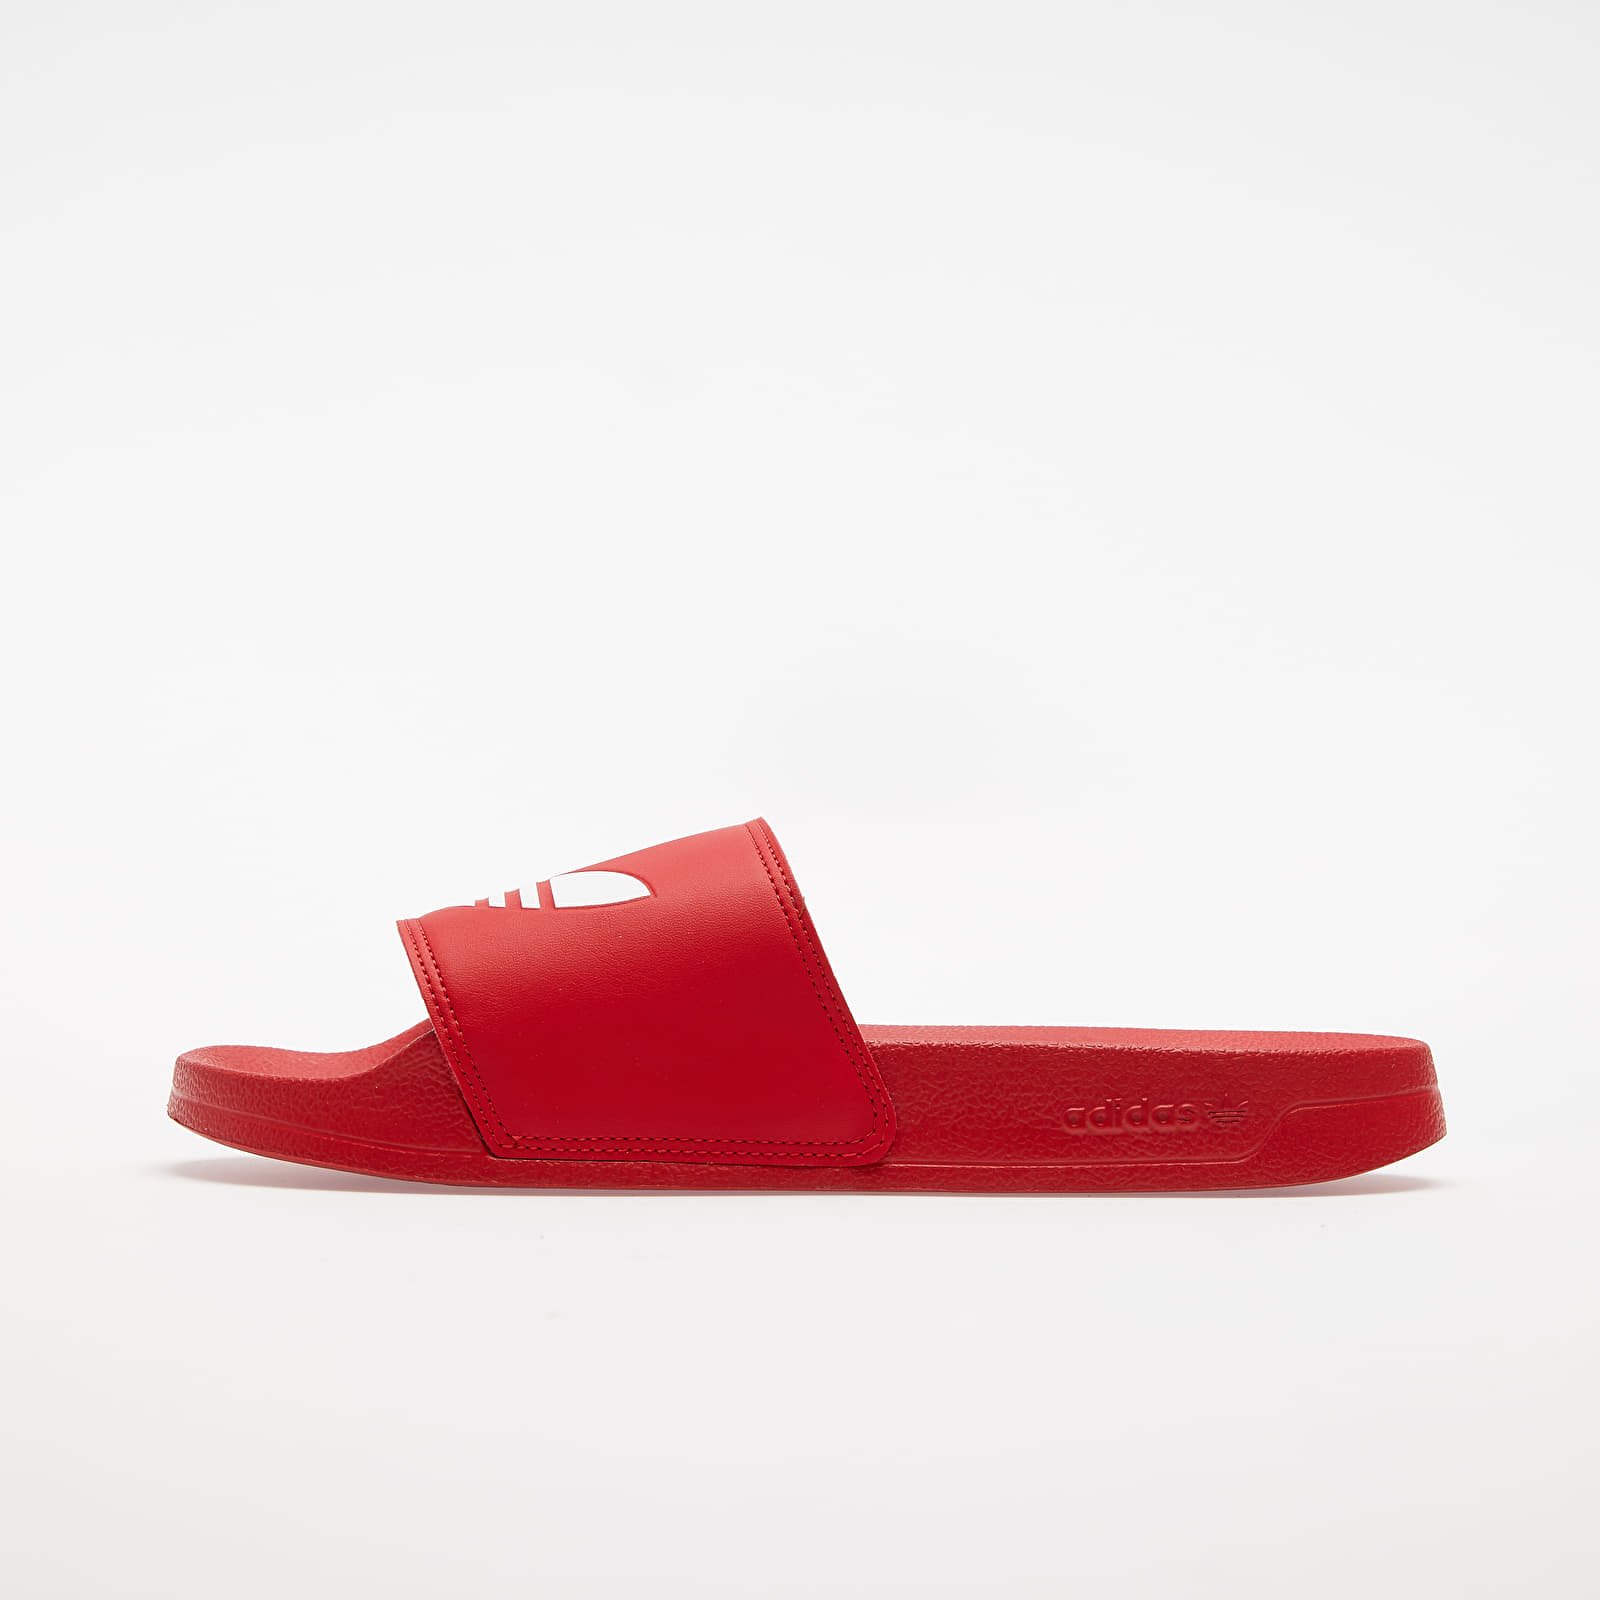 Men's shoes adidas Adilette Lite Scarlet/ Ftwr White/ Scarlet